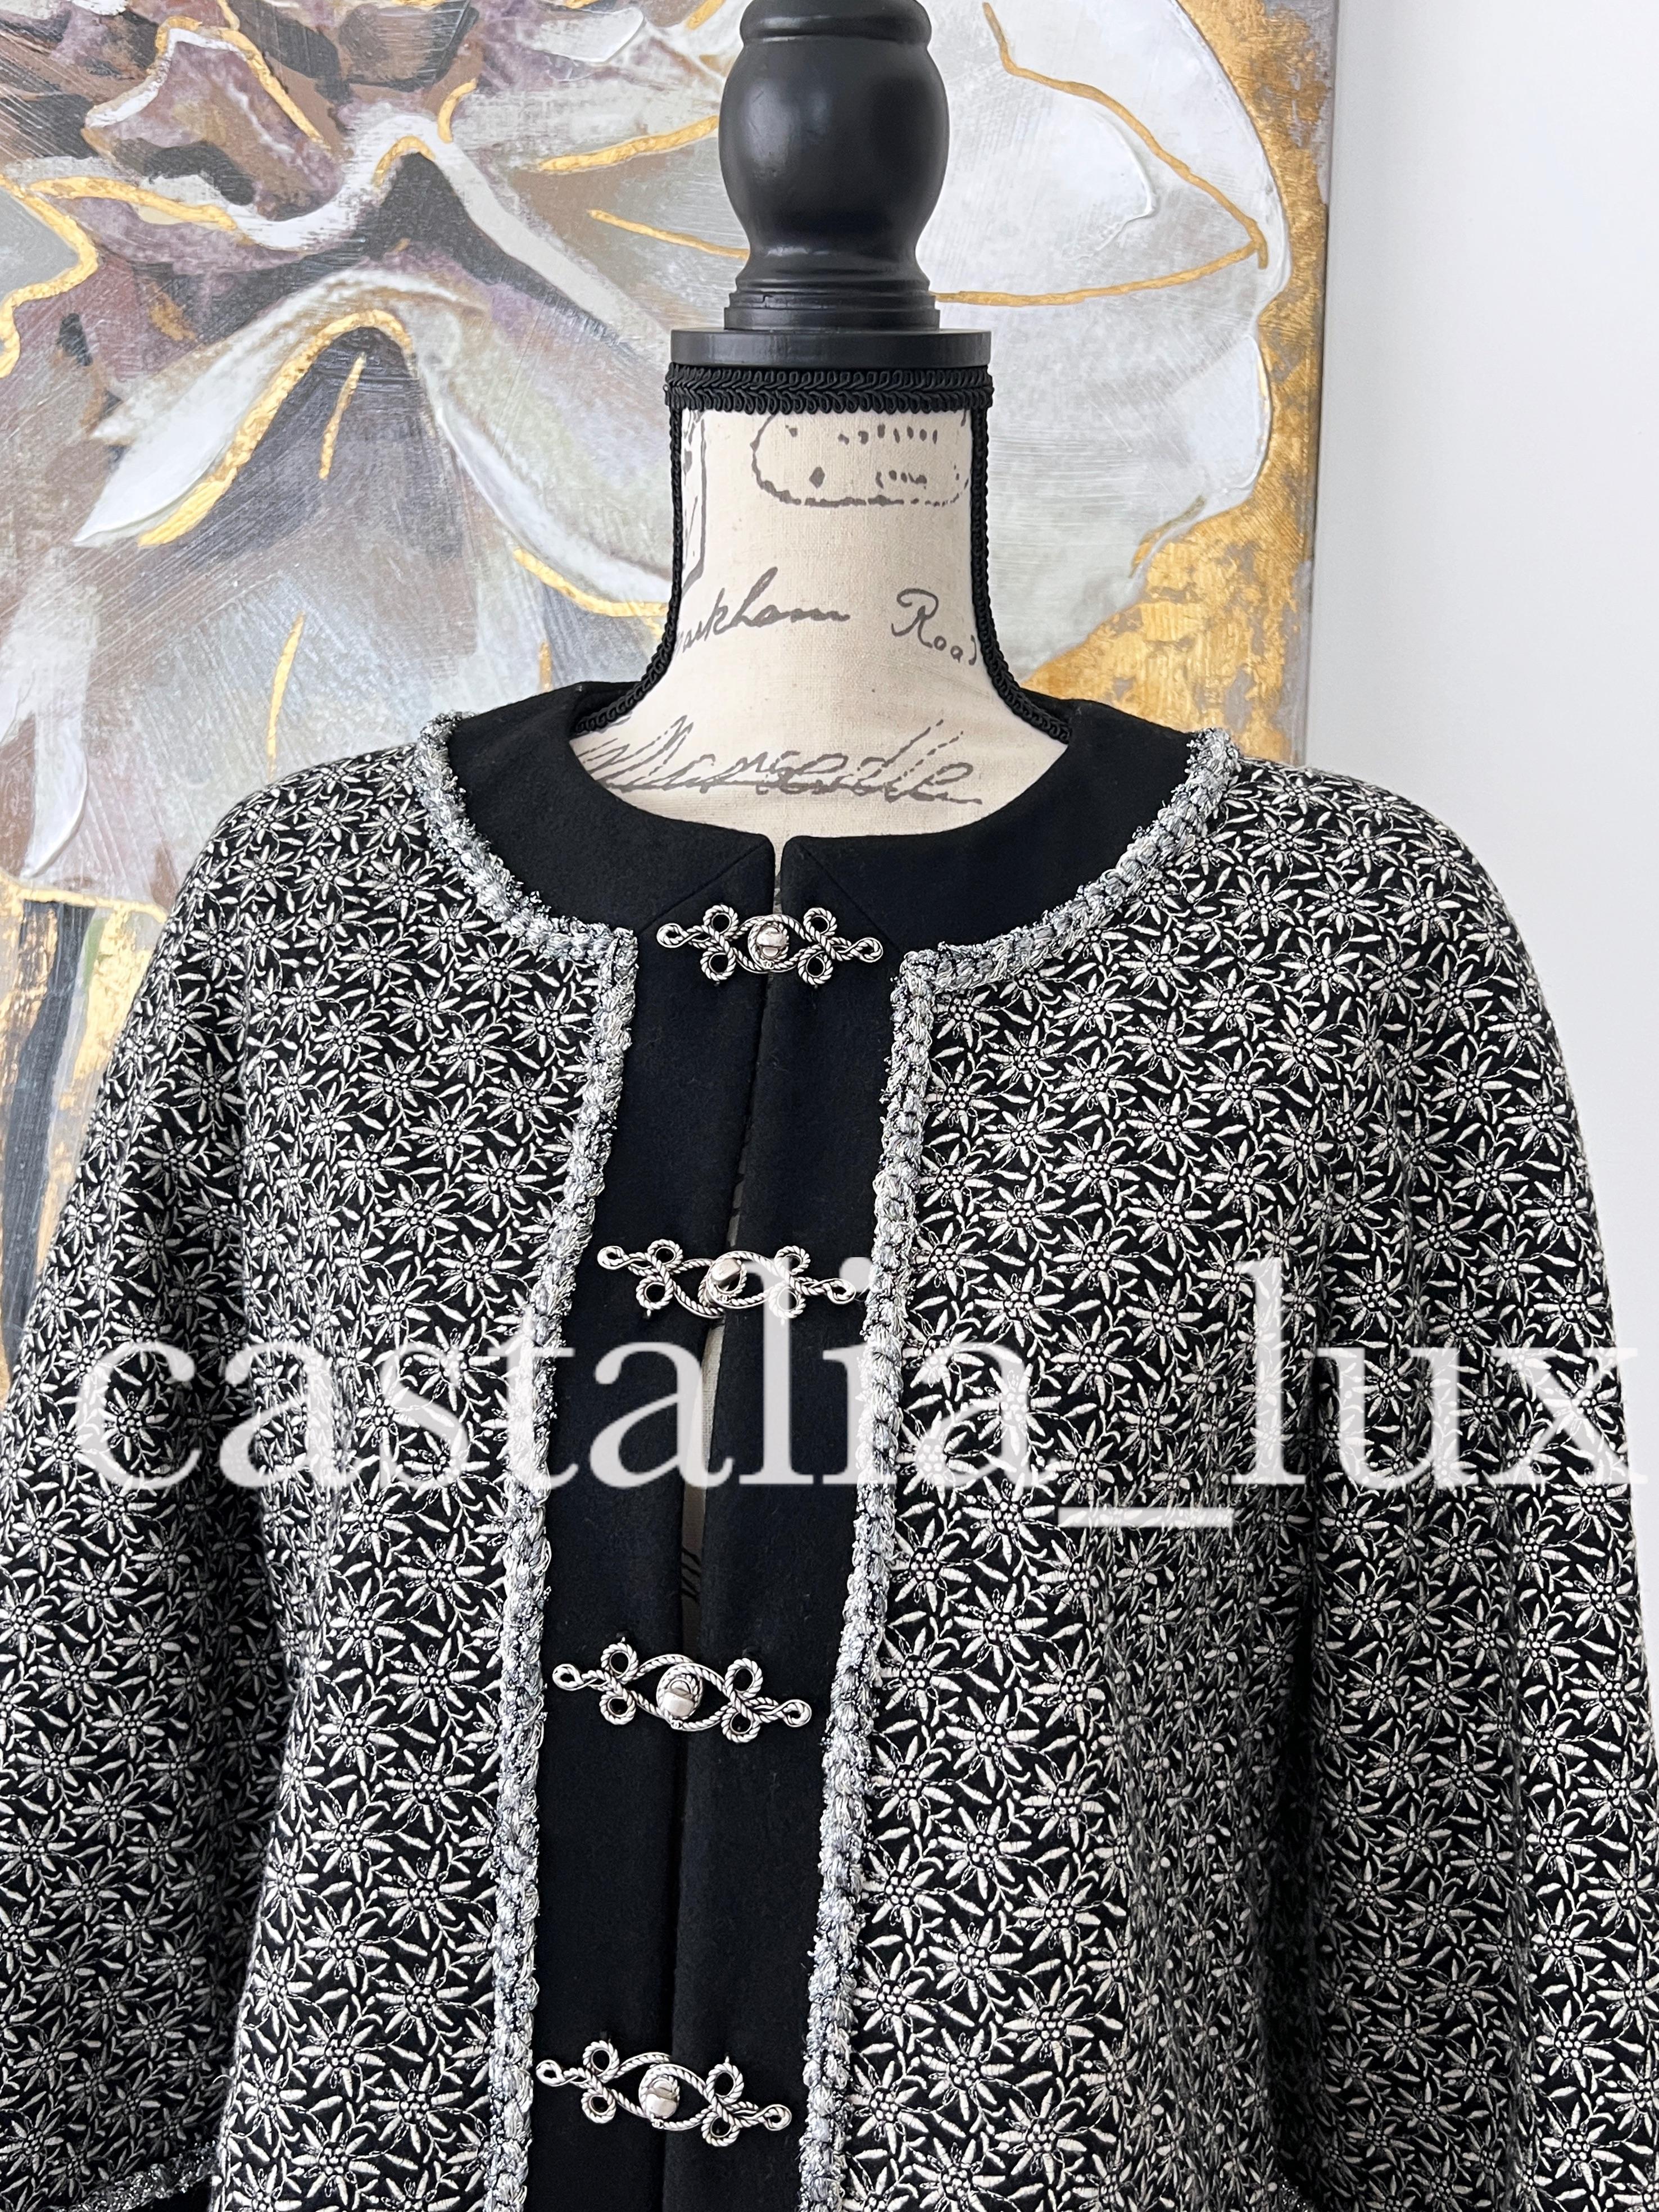 Women's or Men's Chanel Paris / Salzburg Ad Campaign Edelweiss Jacket For Sale